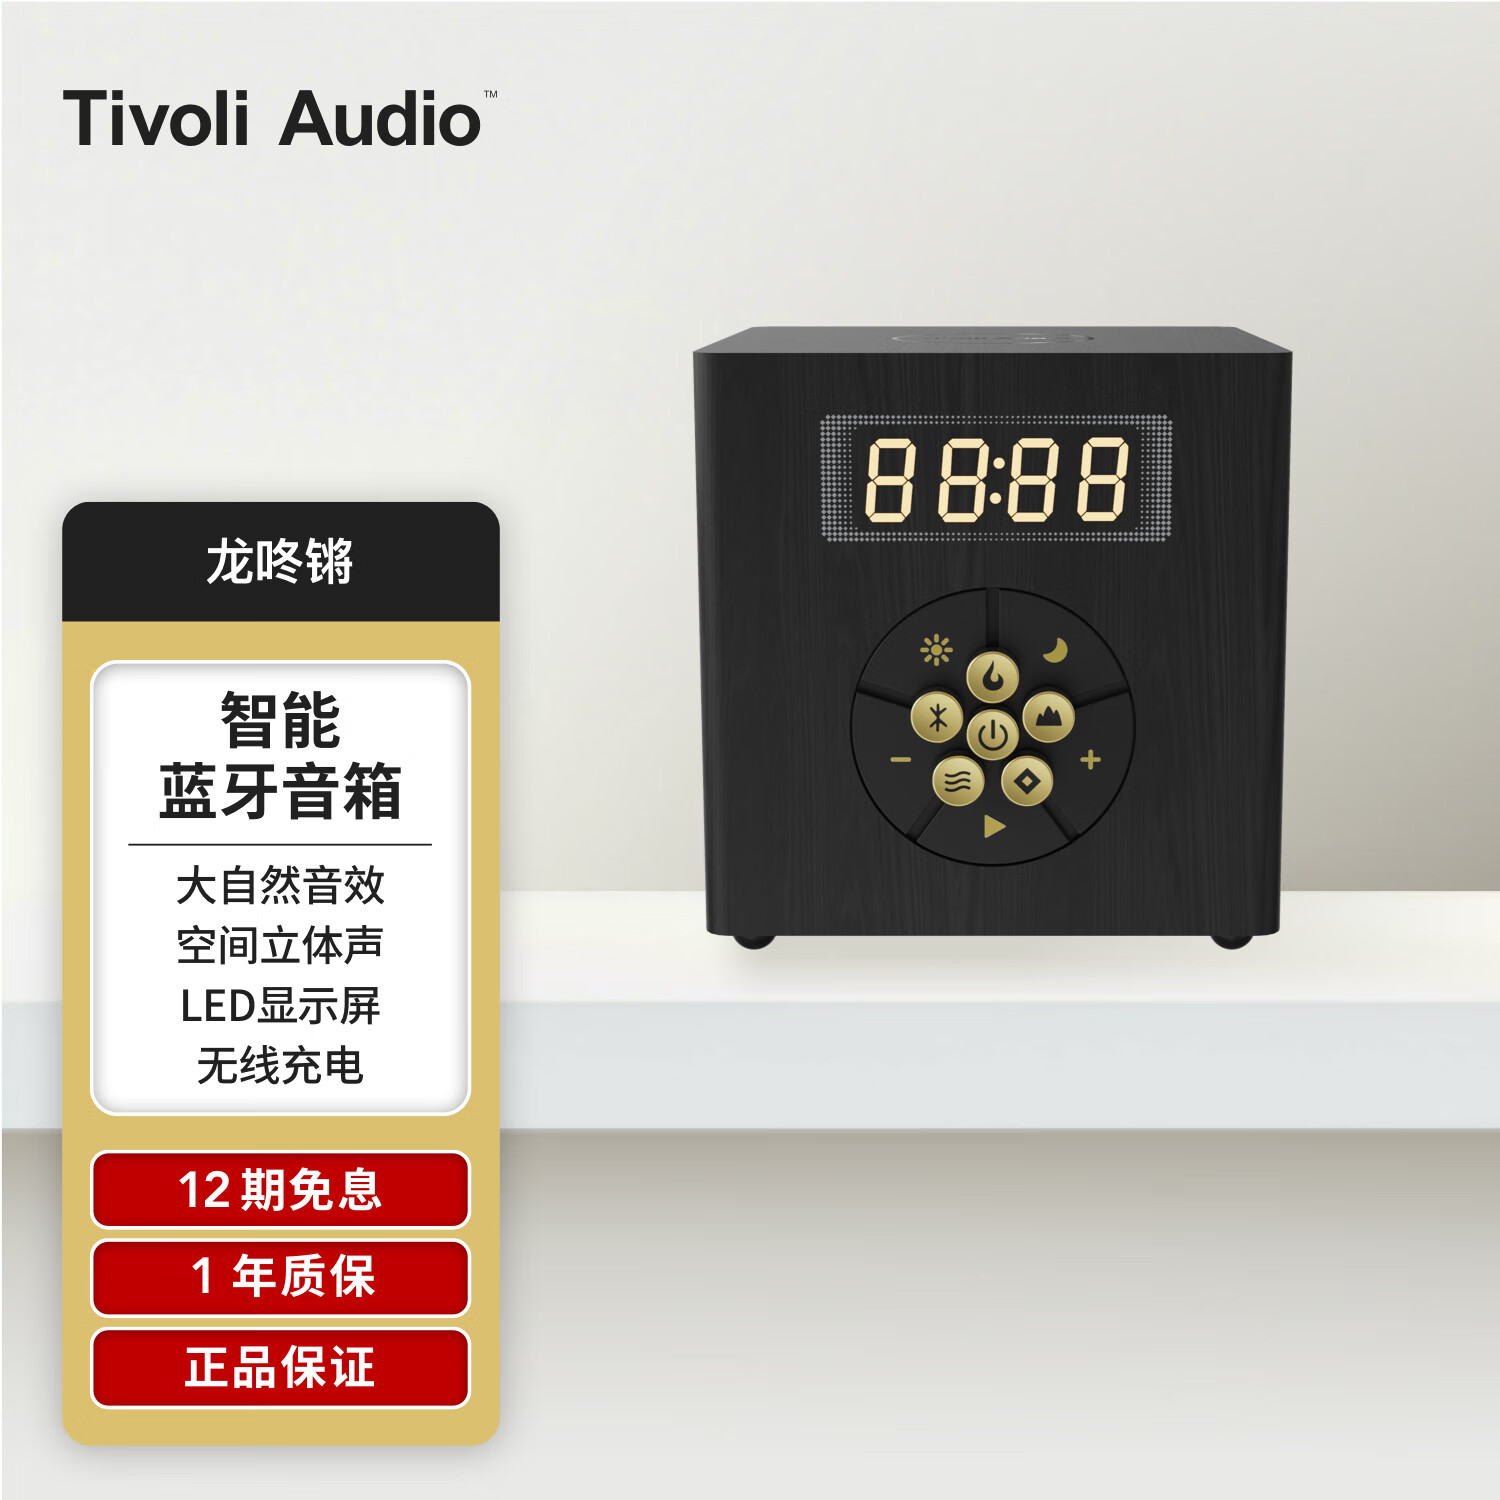 Tivoli Audio 流金岁月 龙咚锵蓝牙音箱立体声HIFI音响重低音音箱礼物礼品 黑木